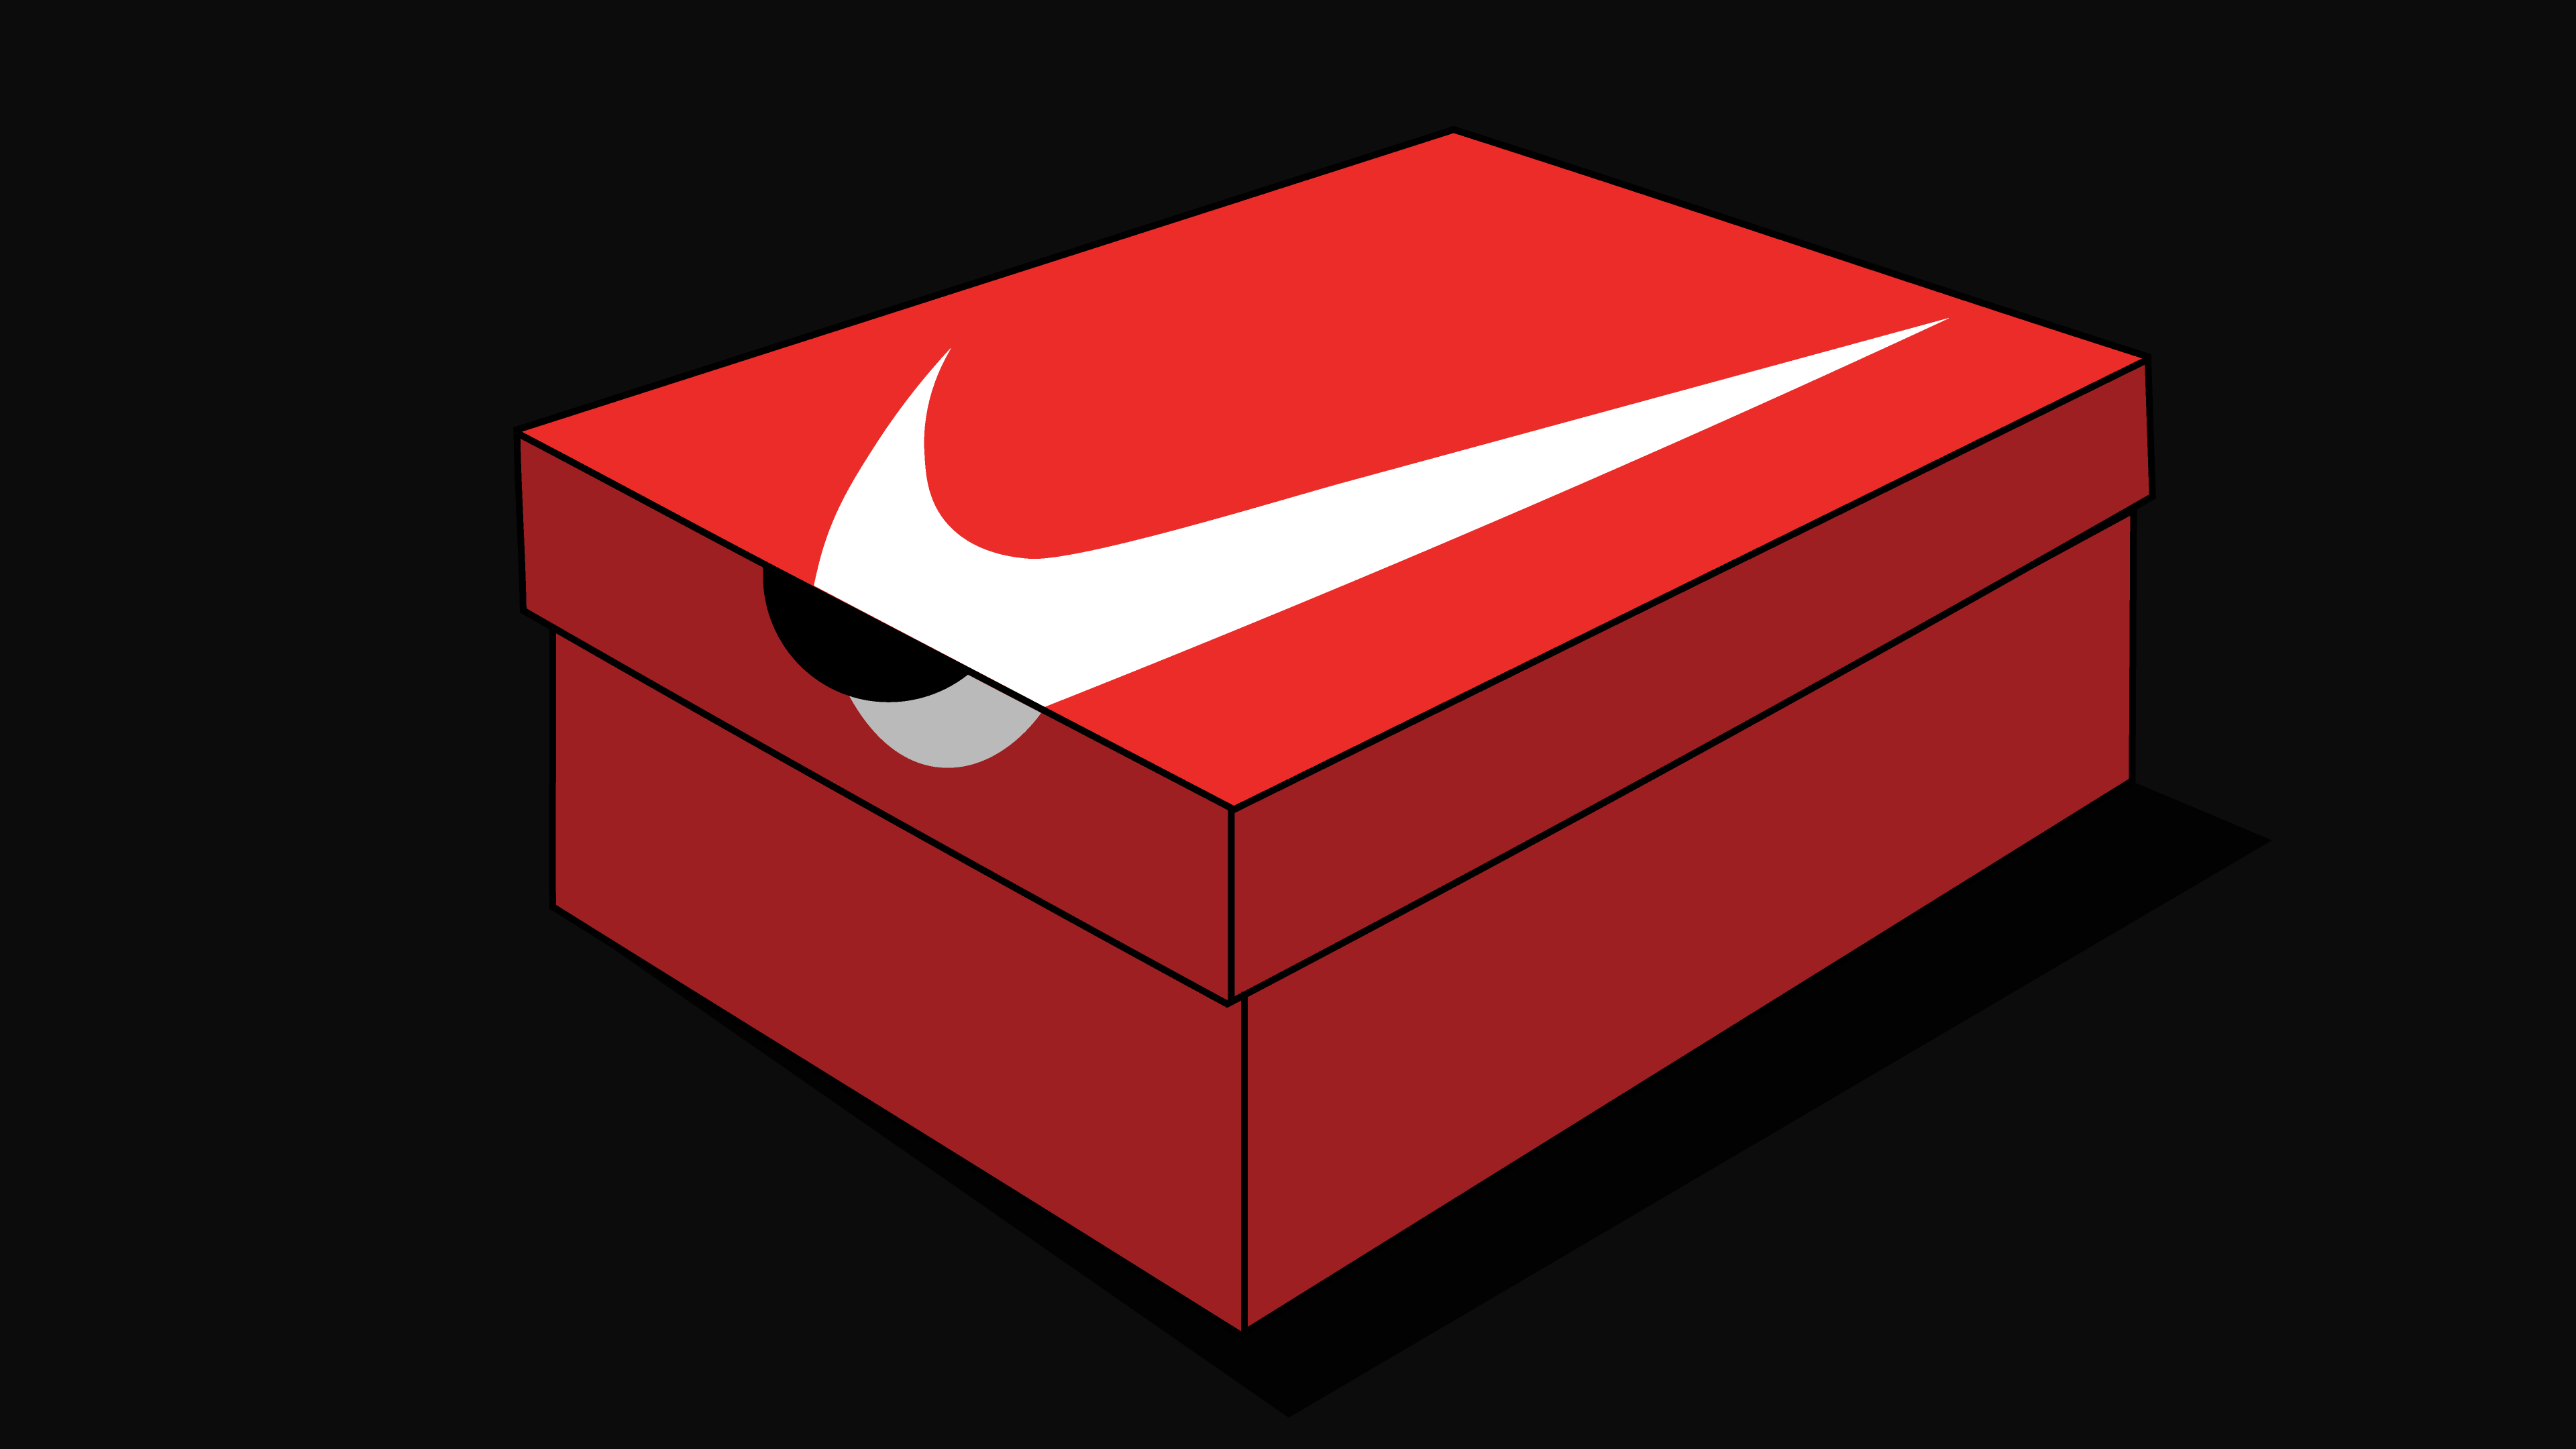 Nike Box. Boks Nike. Shoes Box. Icon isometric Shoe Box.